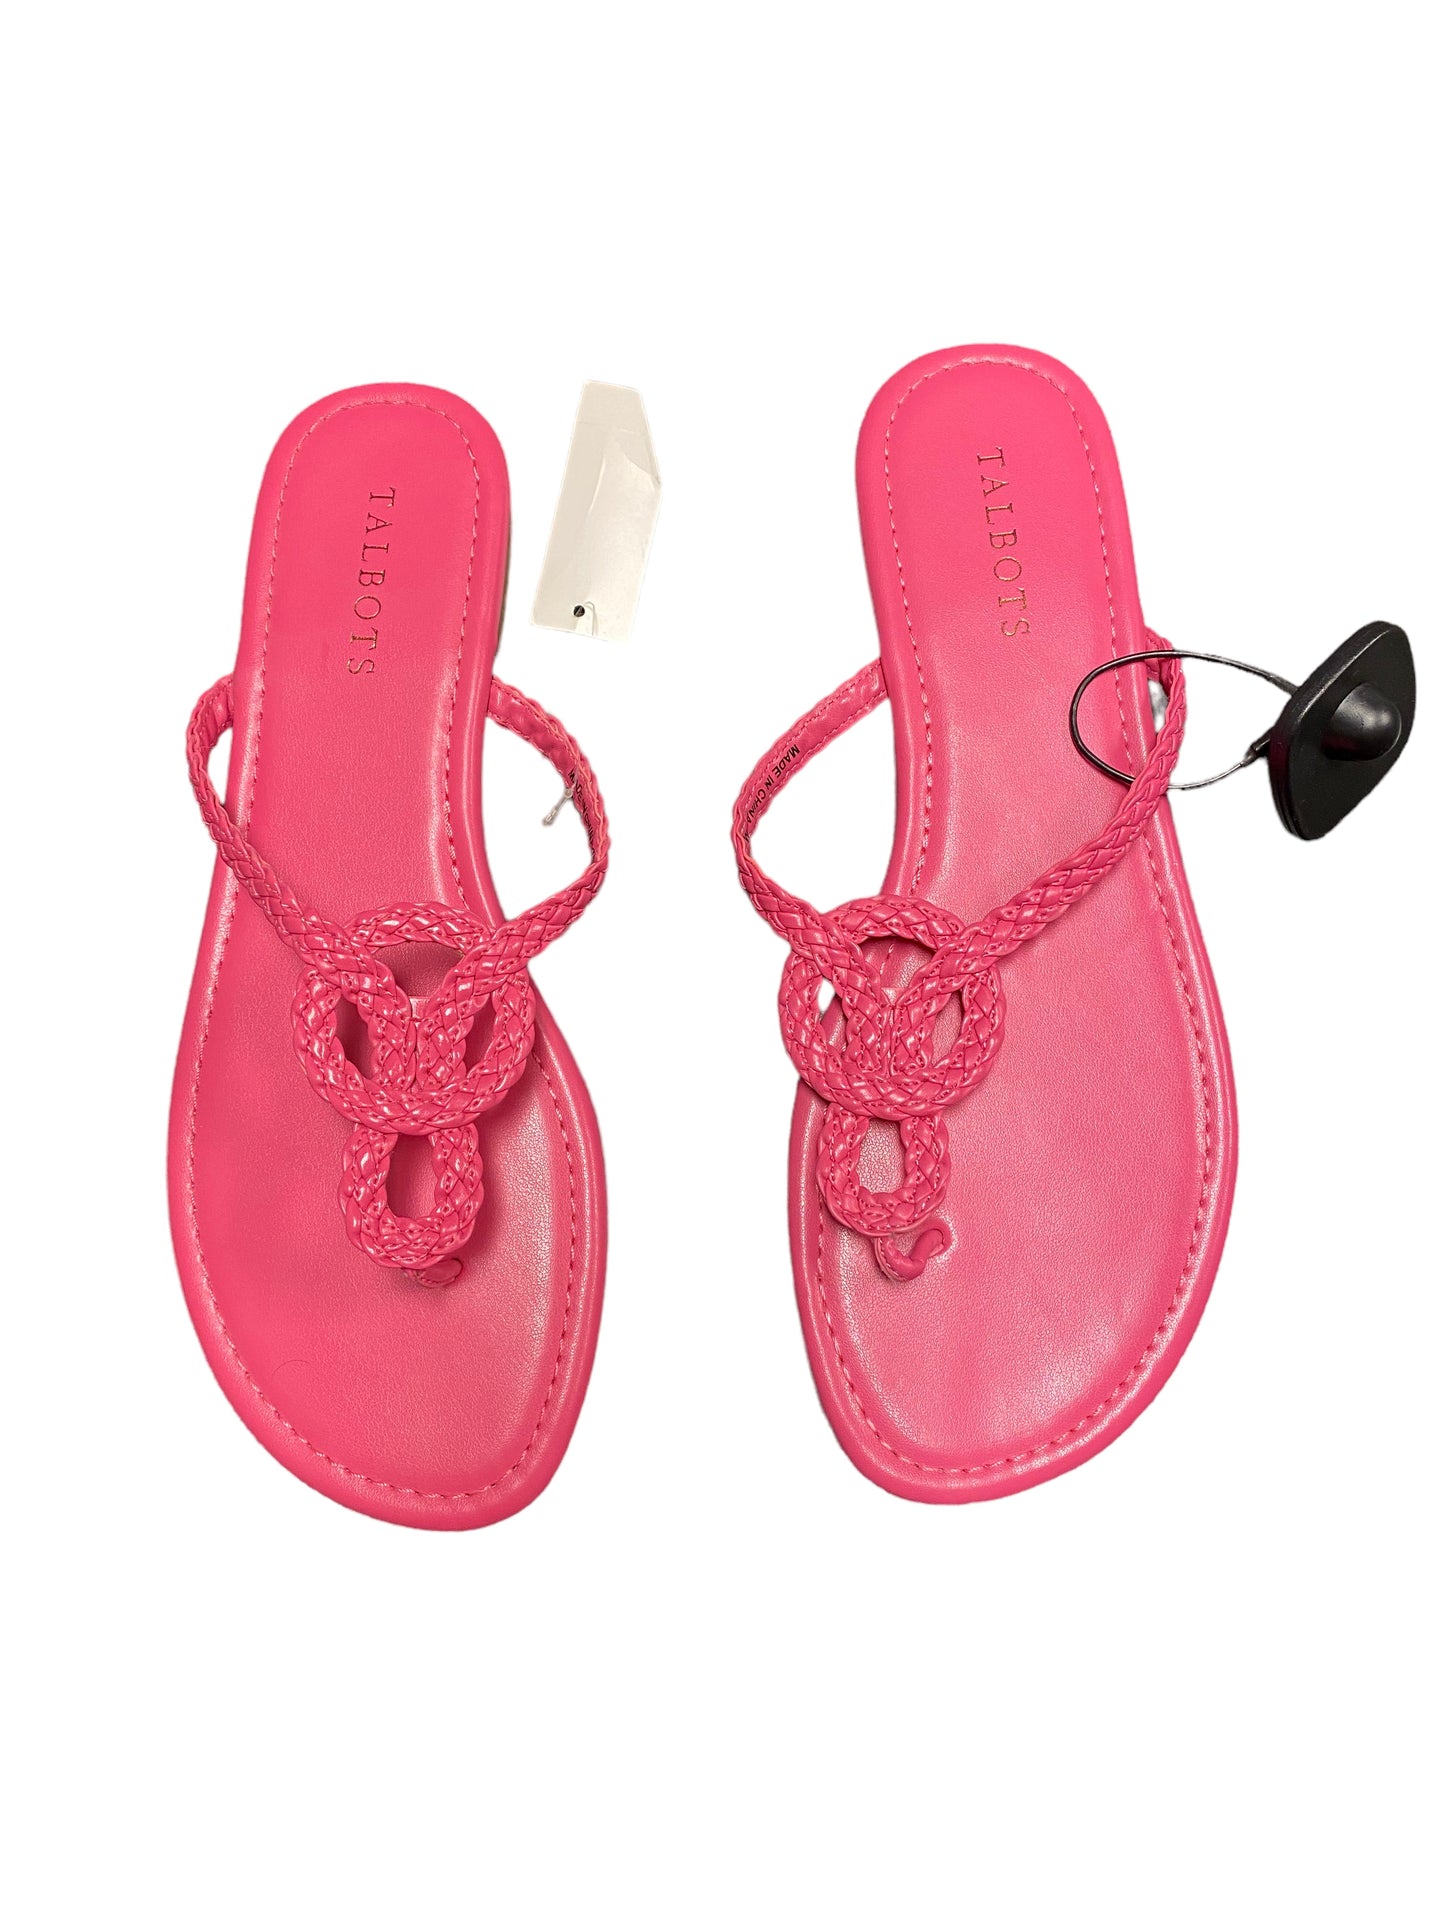 Pink Sandals Flip Flops Talbots, Size 9